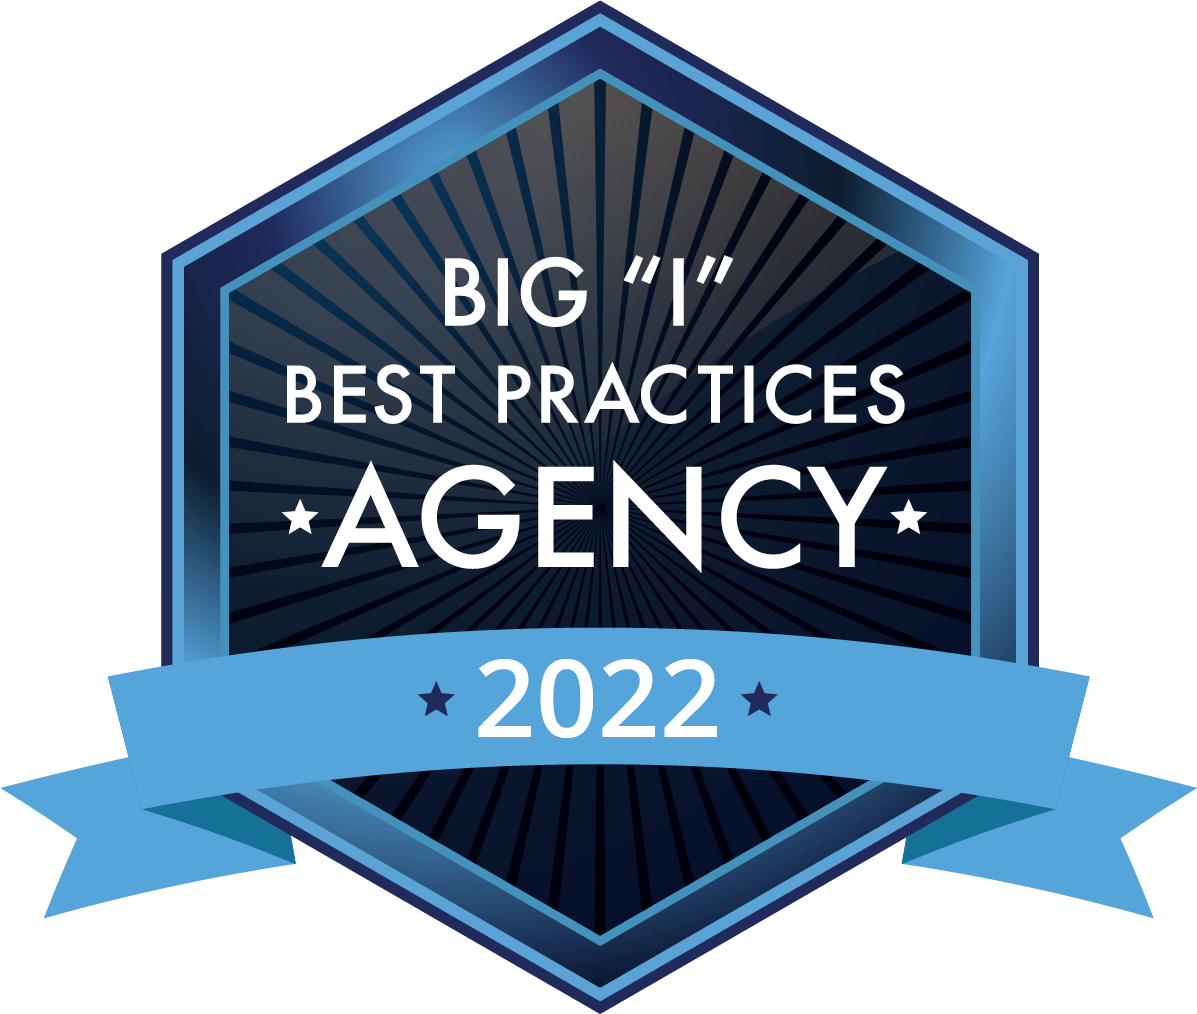 2022 Chubb Cornerstone Agency